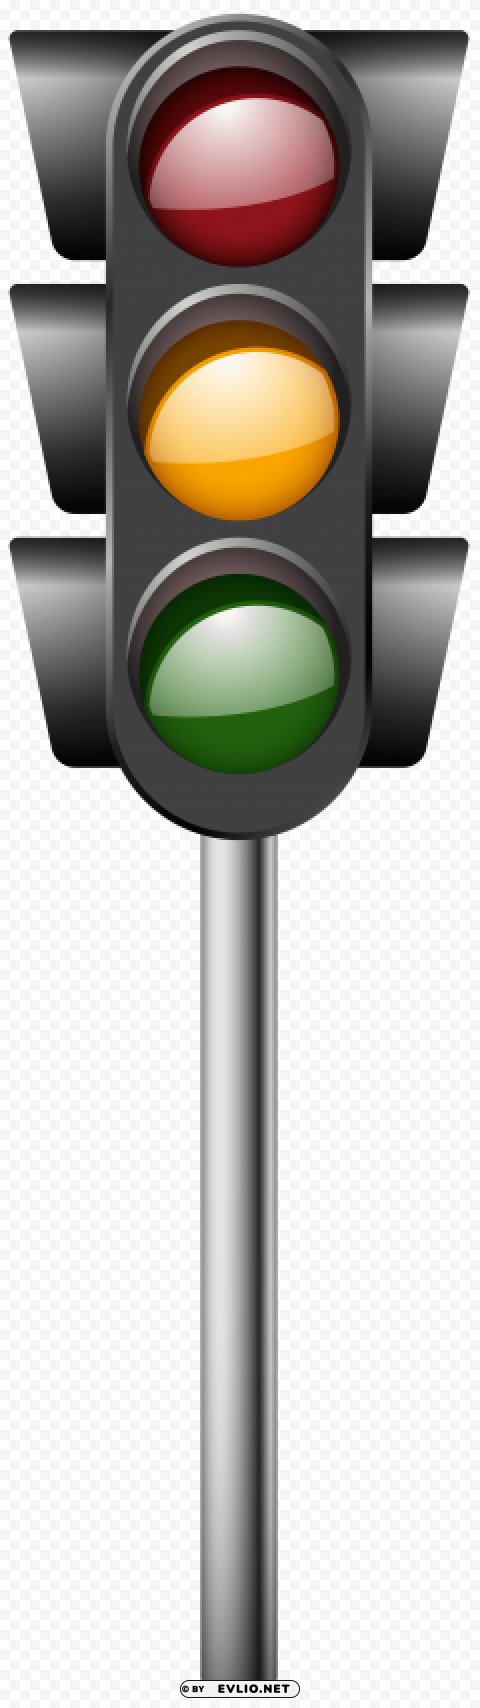 traffic light PNG for design